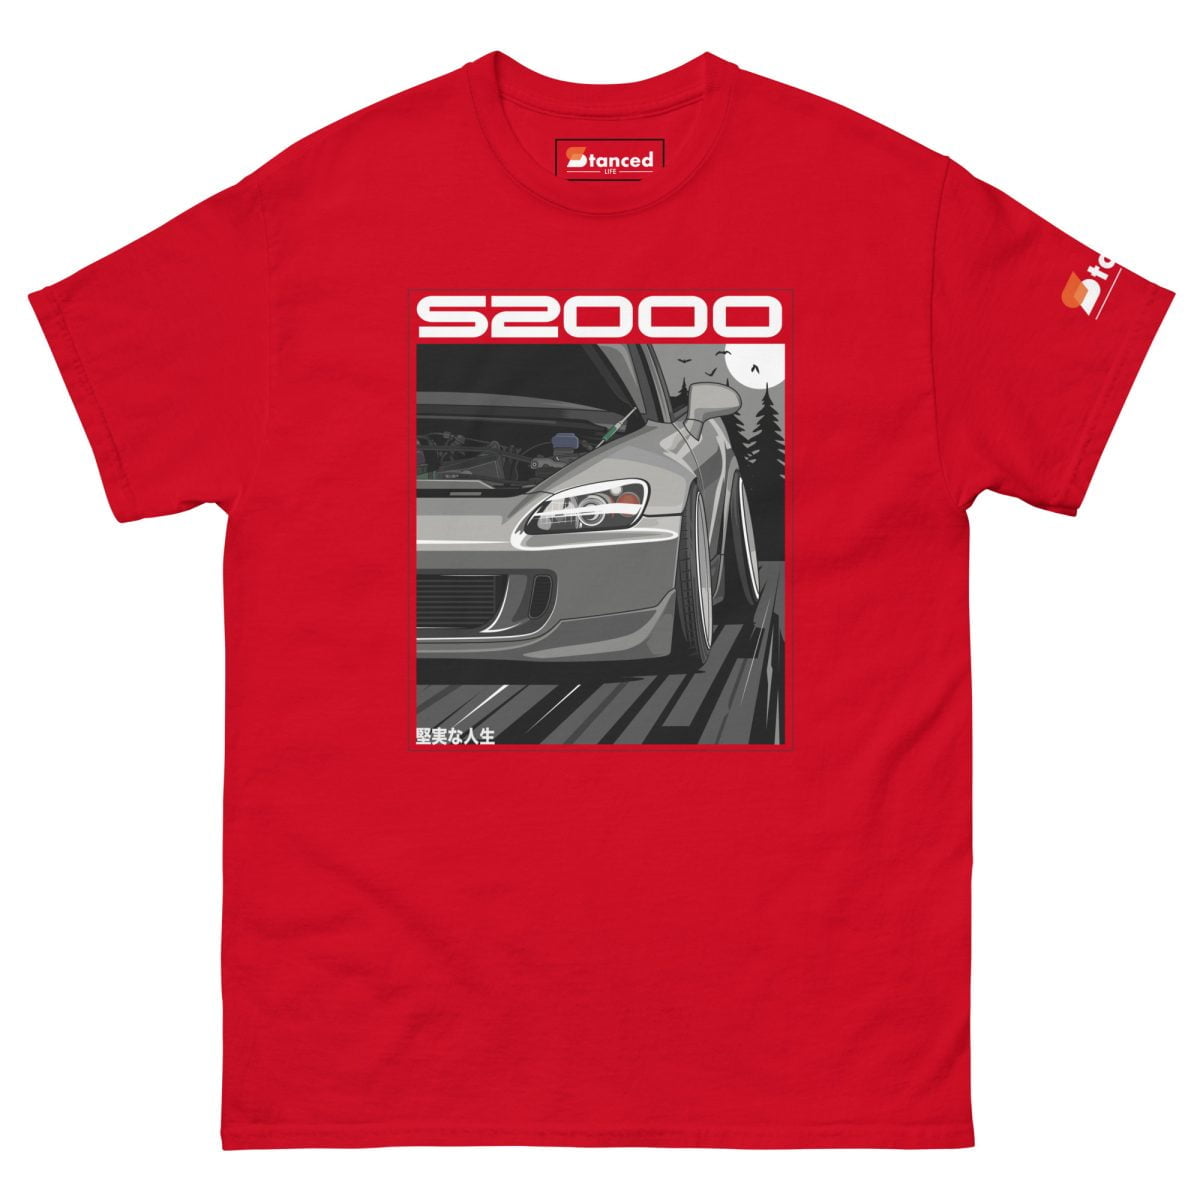 A Honda S2000 Mens Graphic T shirt featuring the iconic Honda S2000 emblem | StancedLife